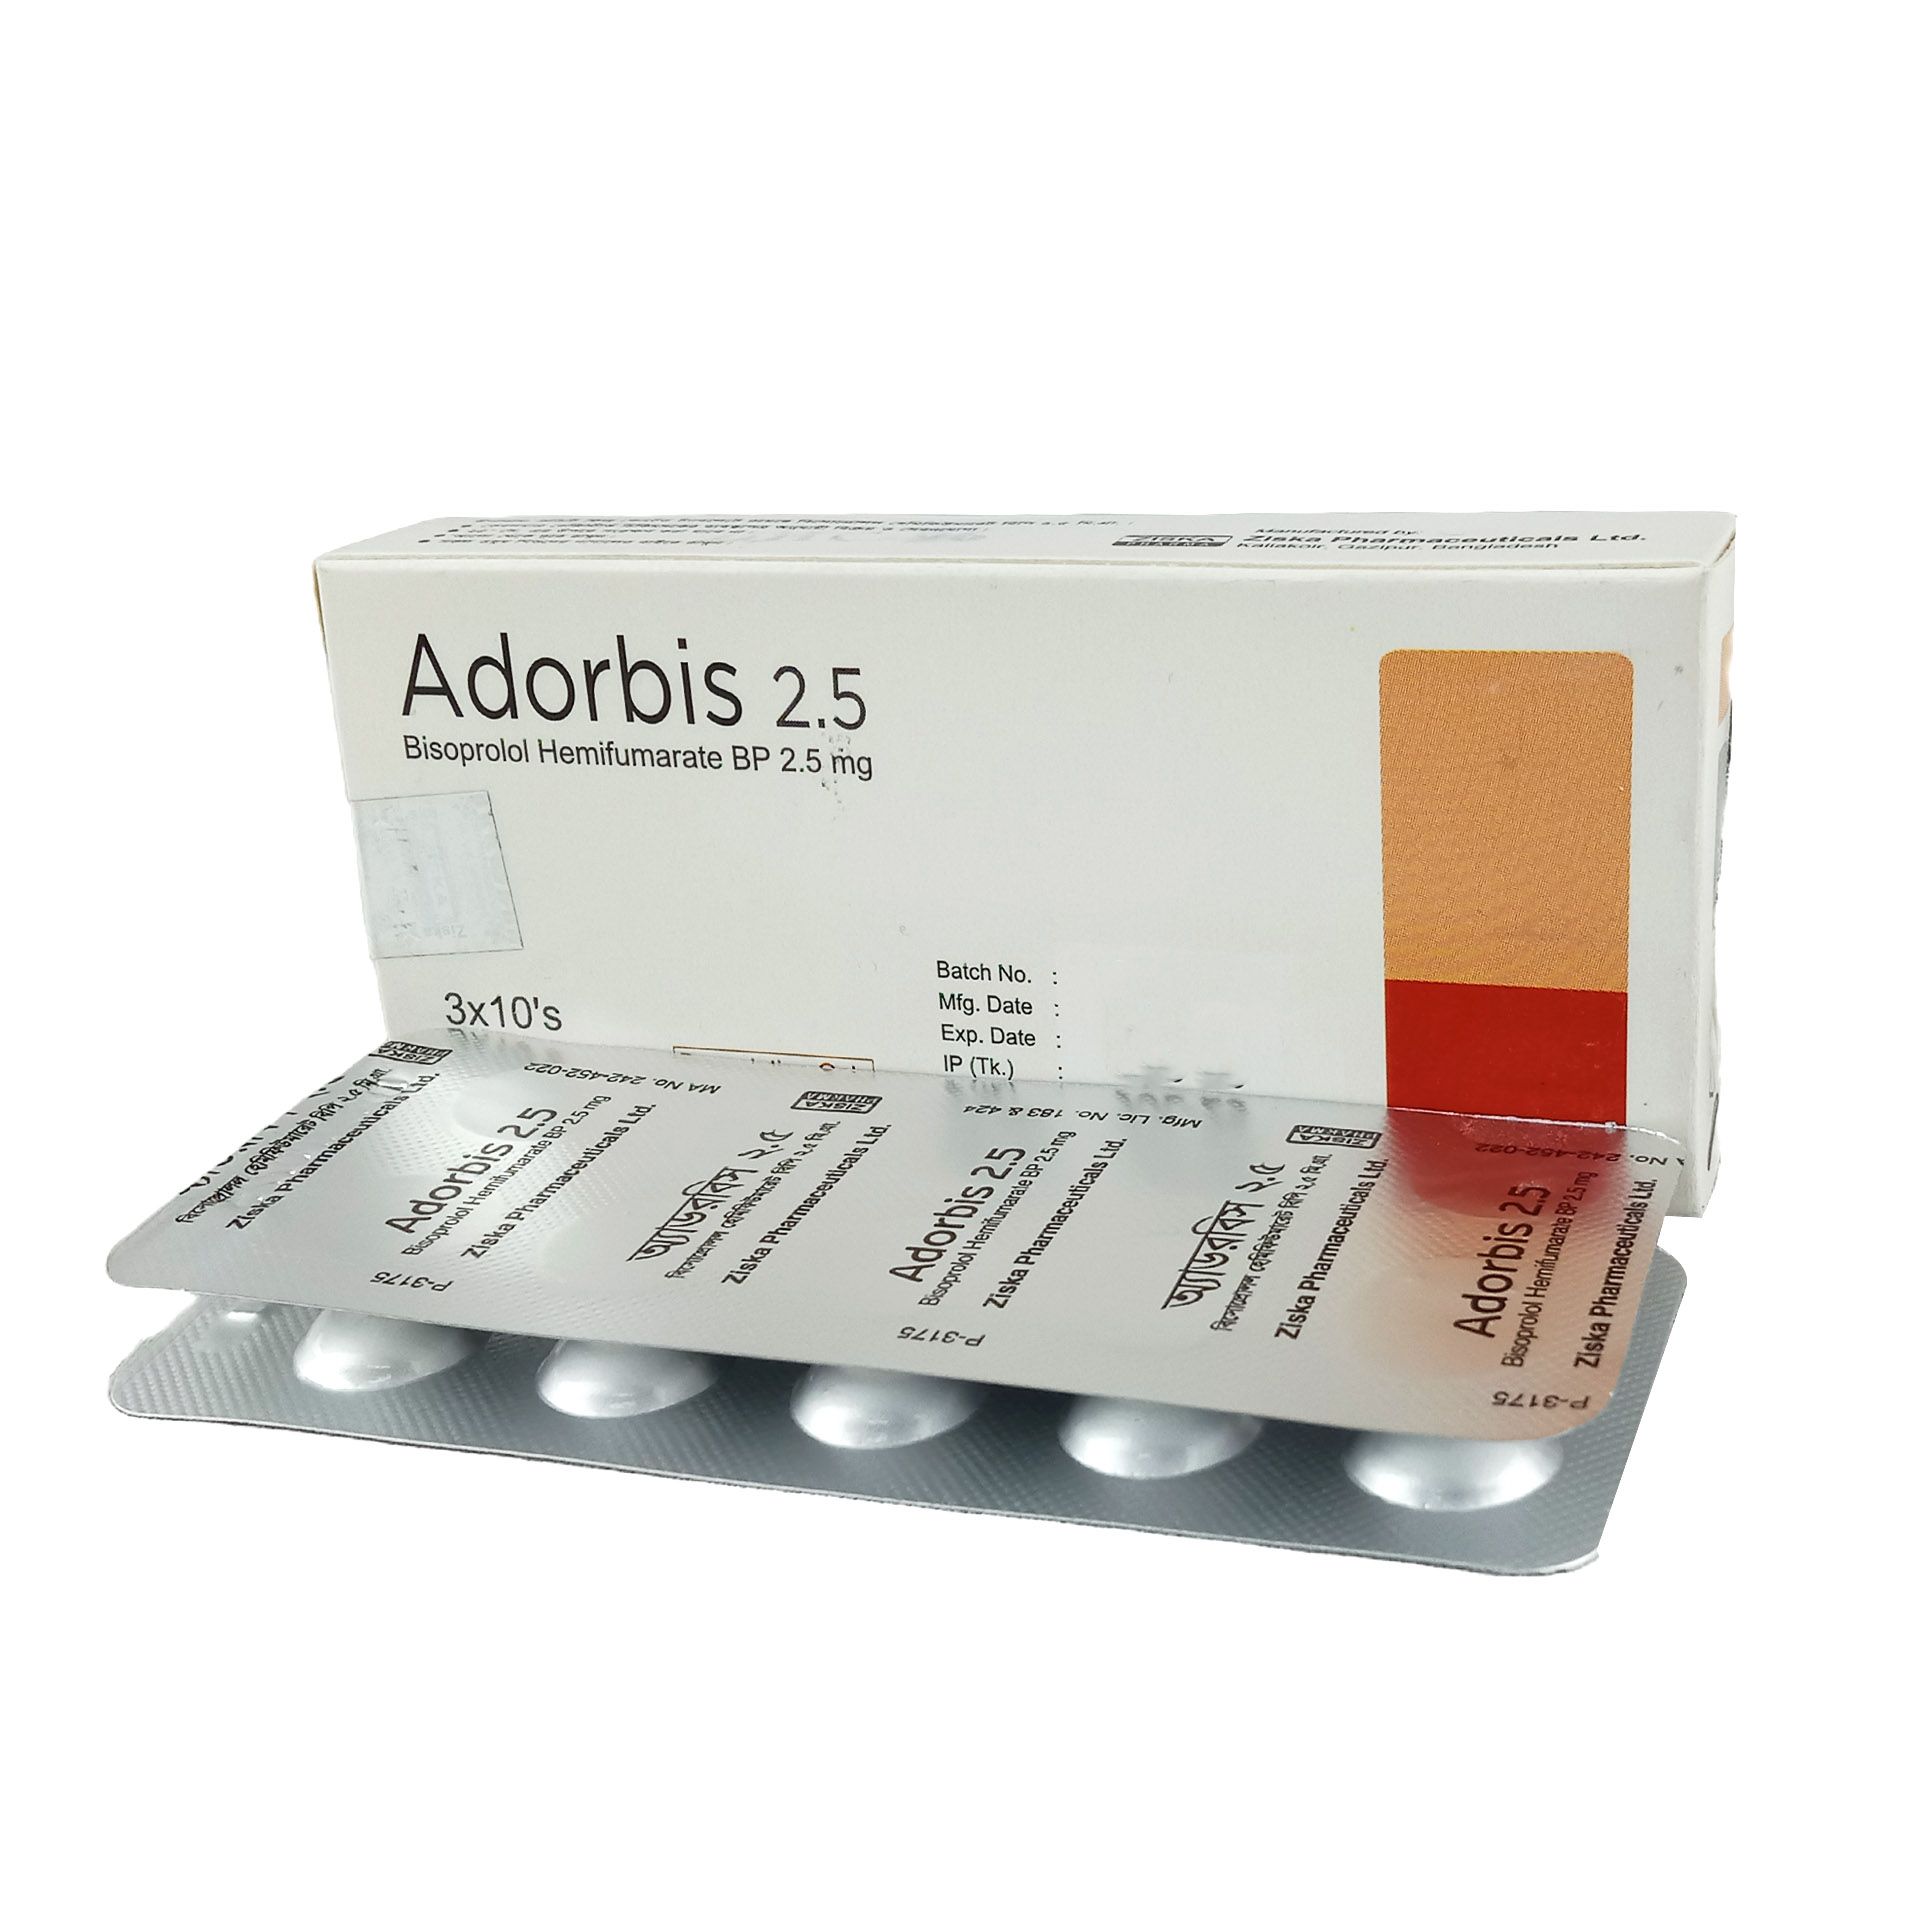 Adorbis 2.5 2.5mg Tablet